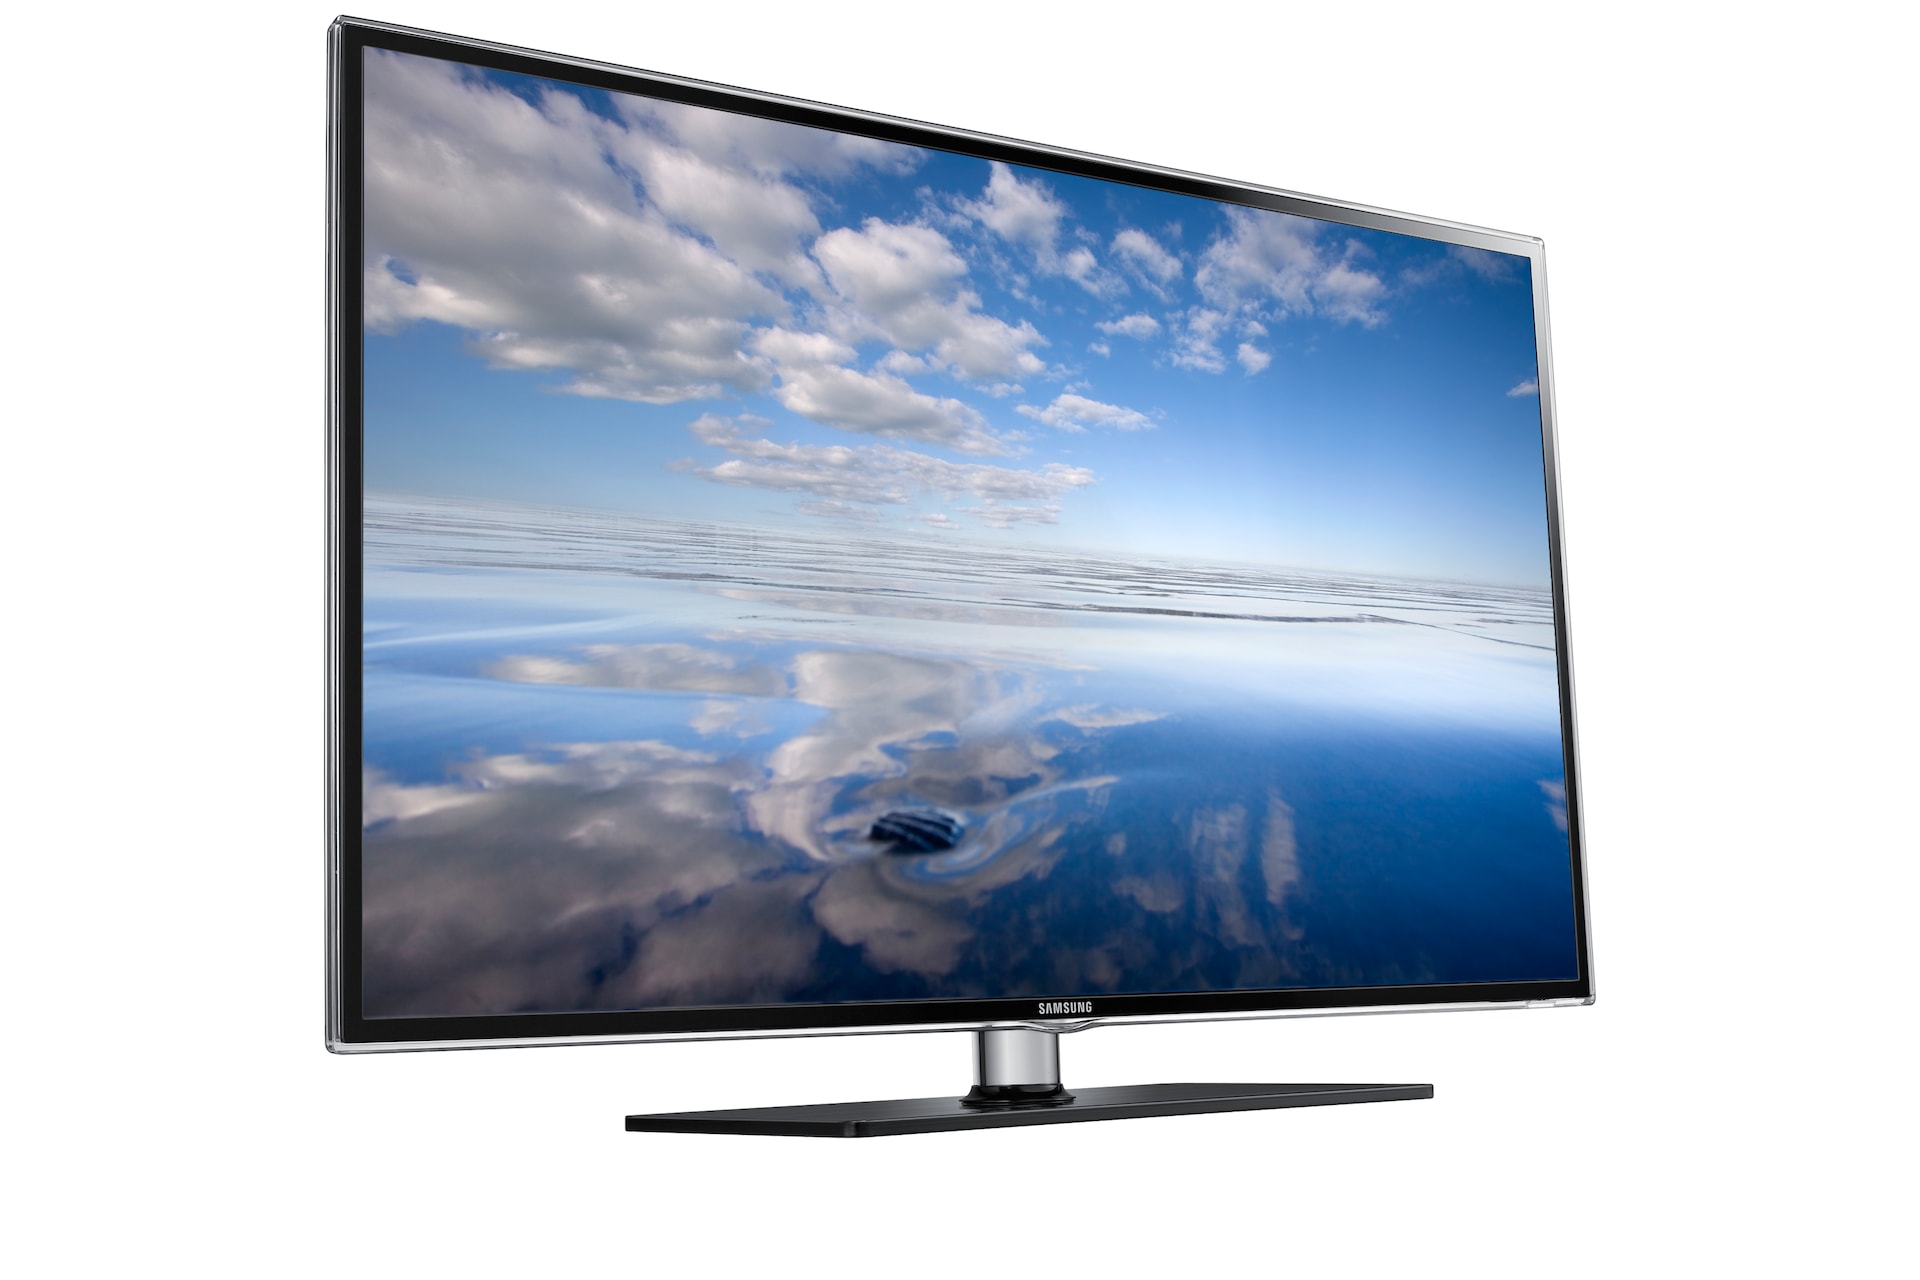 55 6900 Series smart 3D full HD 1080p LED TV | SAMSUNG Canada